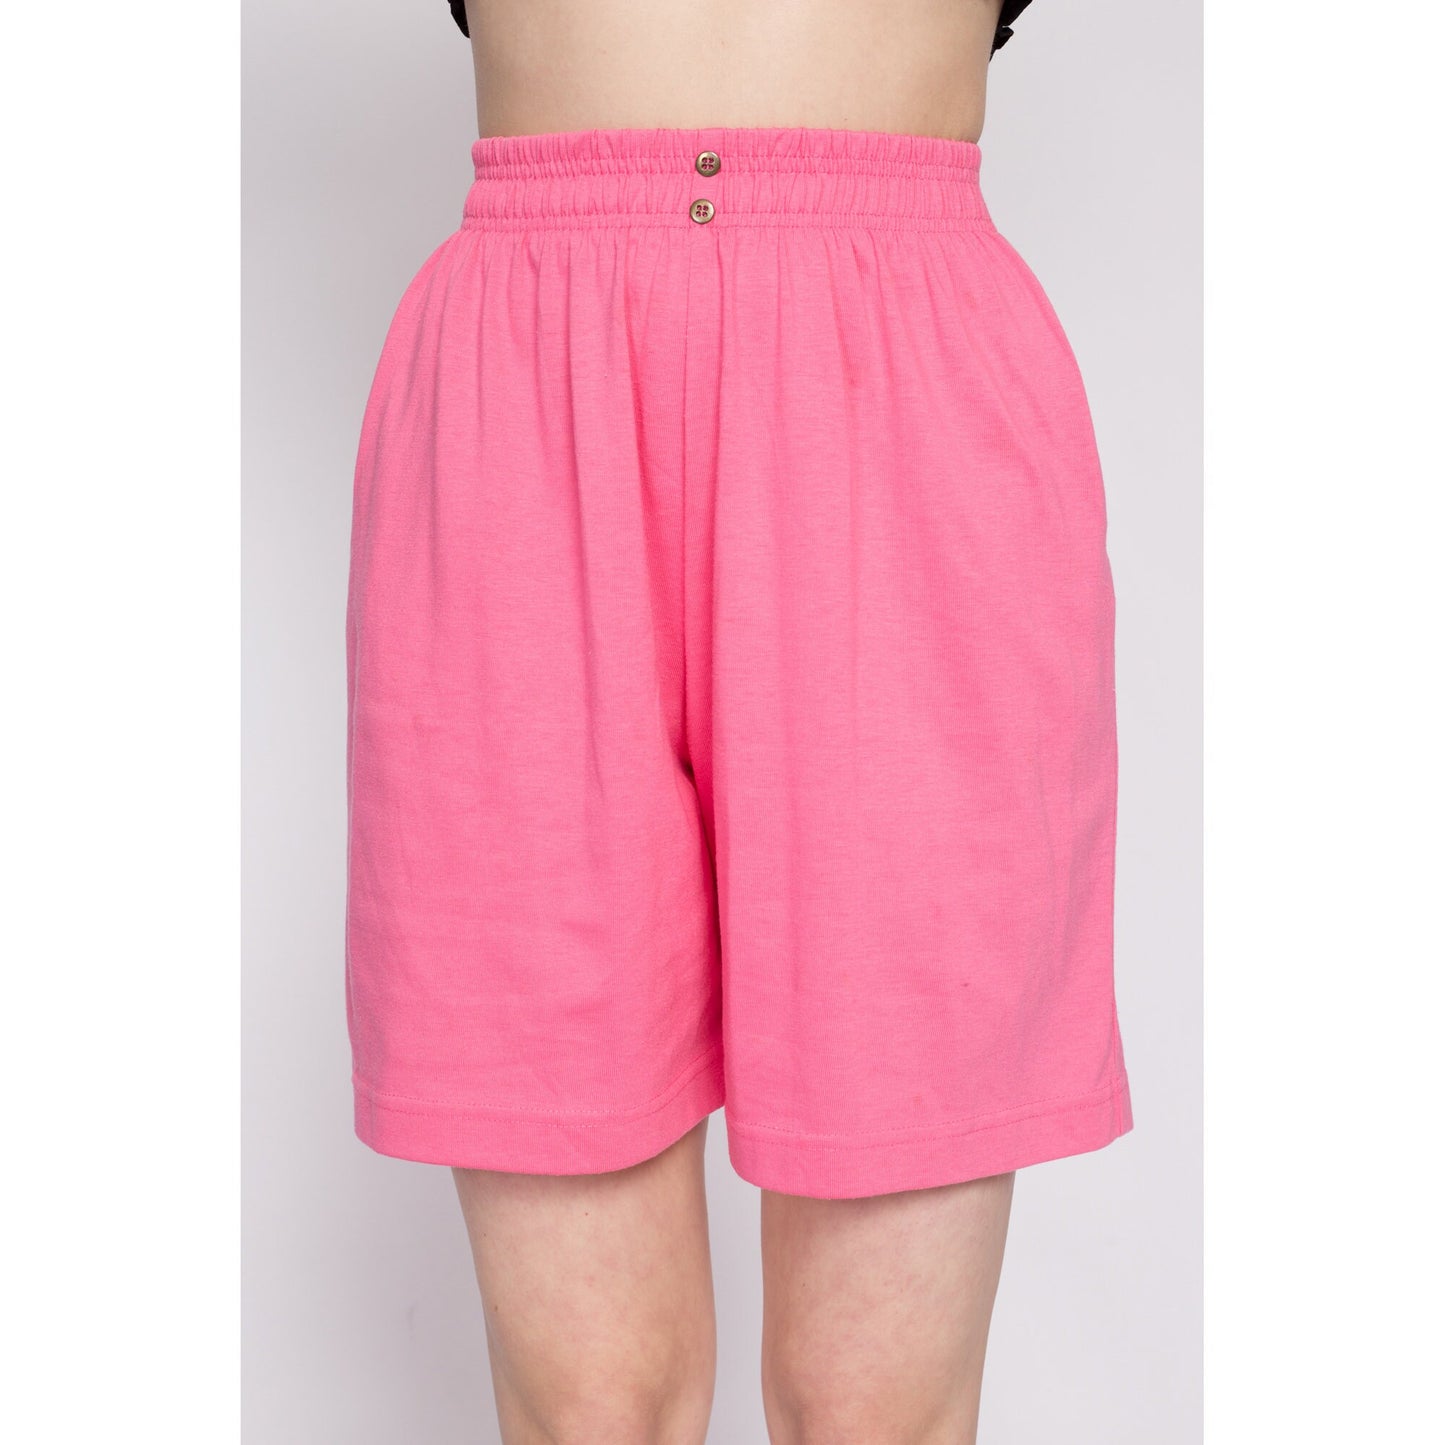 80s Pink Elastic Waist Shorts - Small to Medium | Vintage High Rise Wide Leg Causal Pocket Lounge Shorts